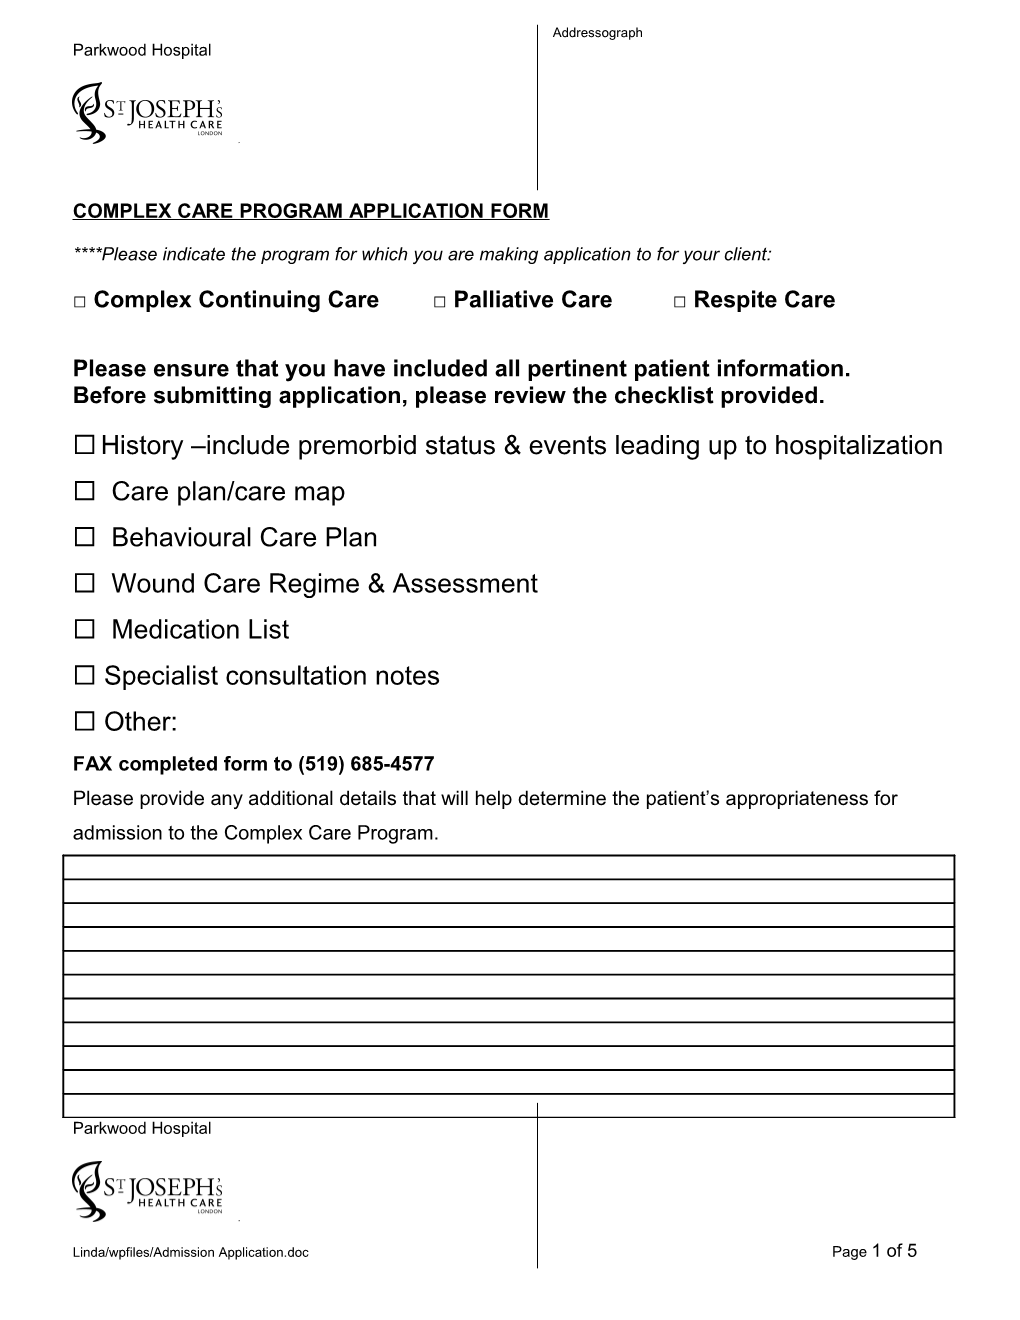 Complex Care Program Application Form